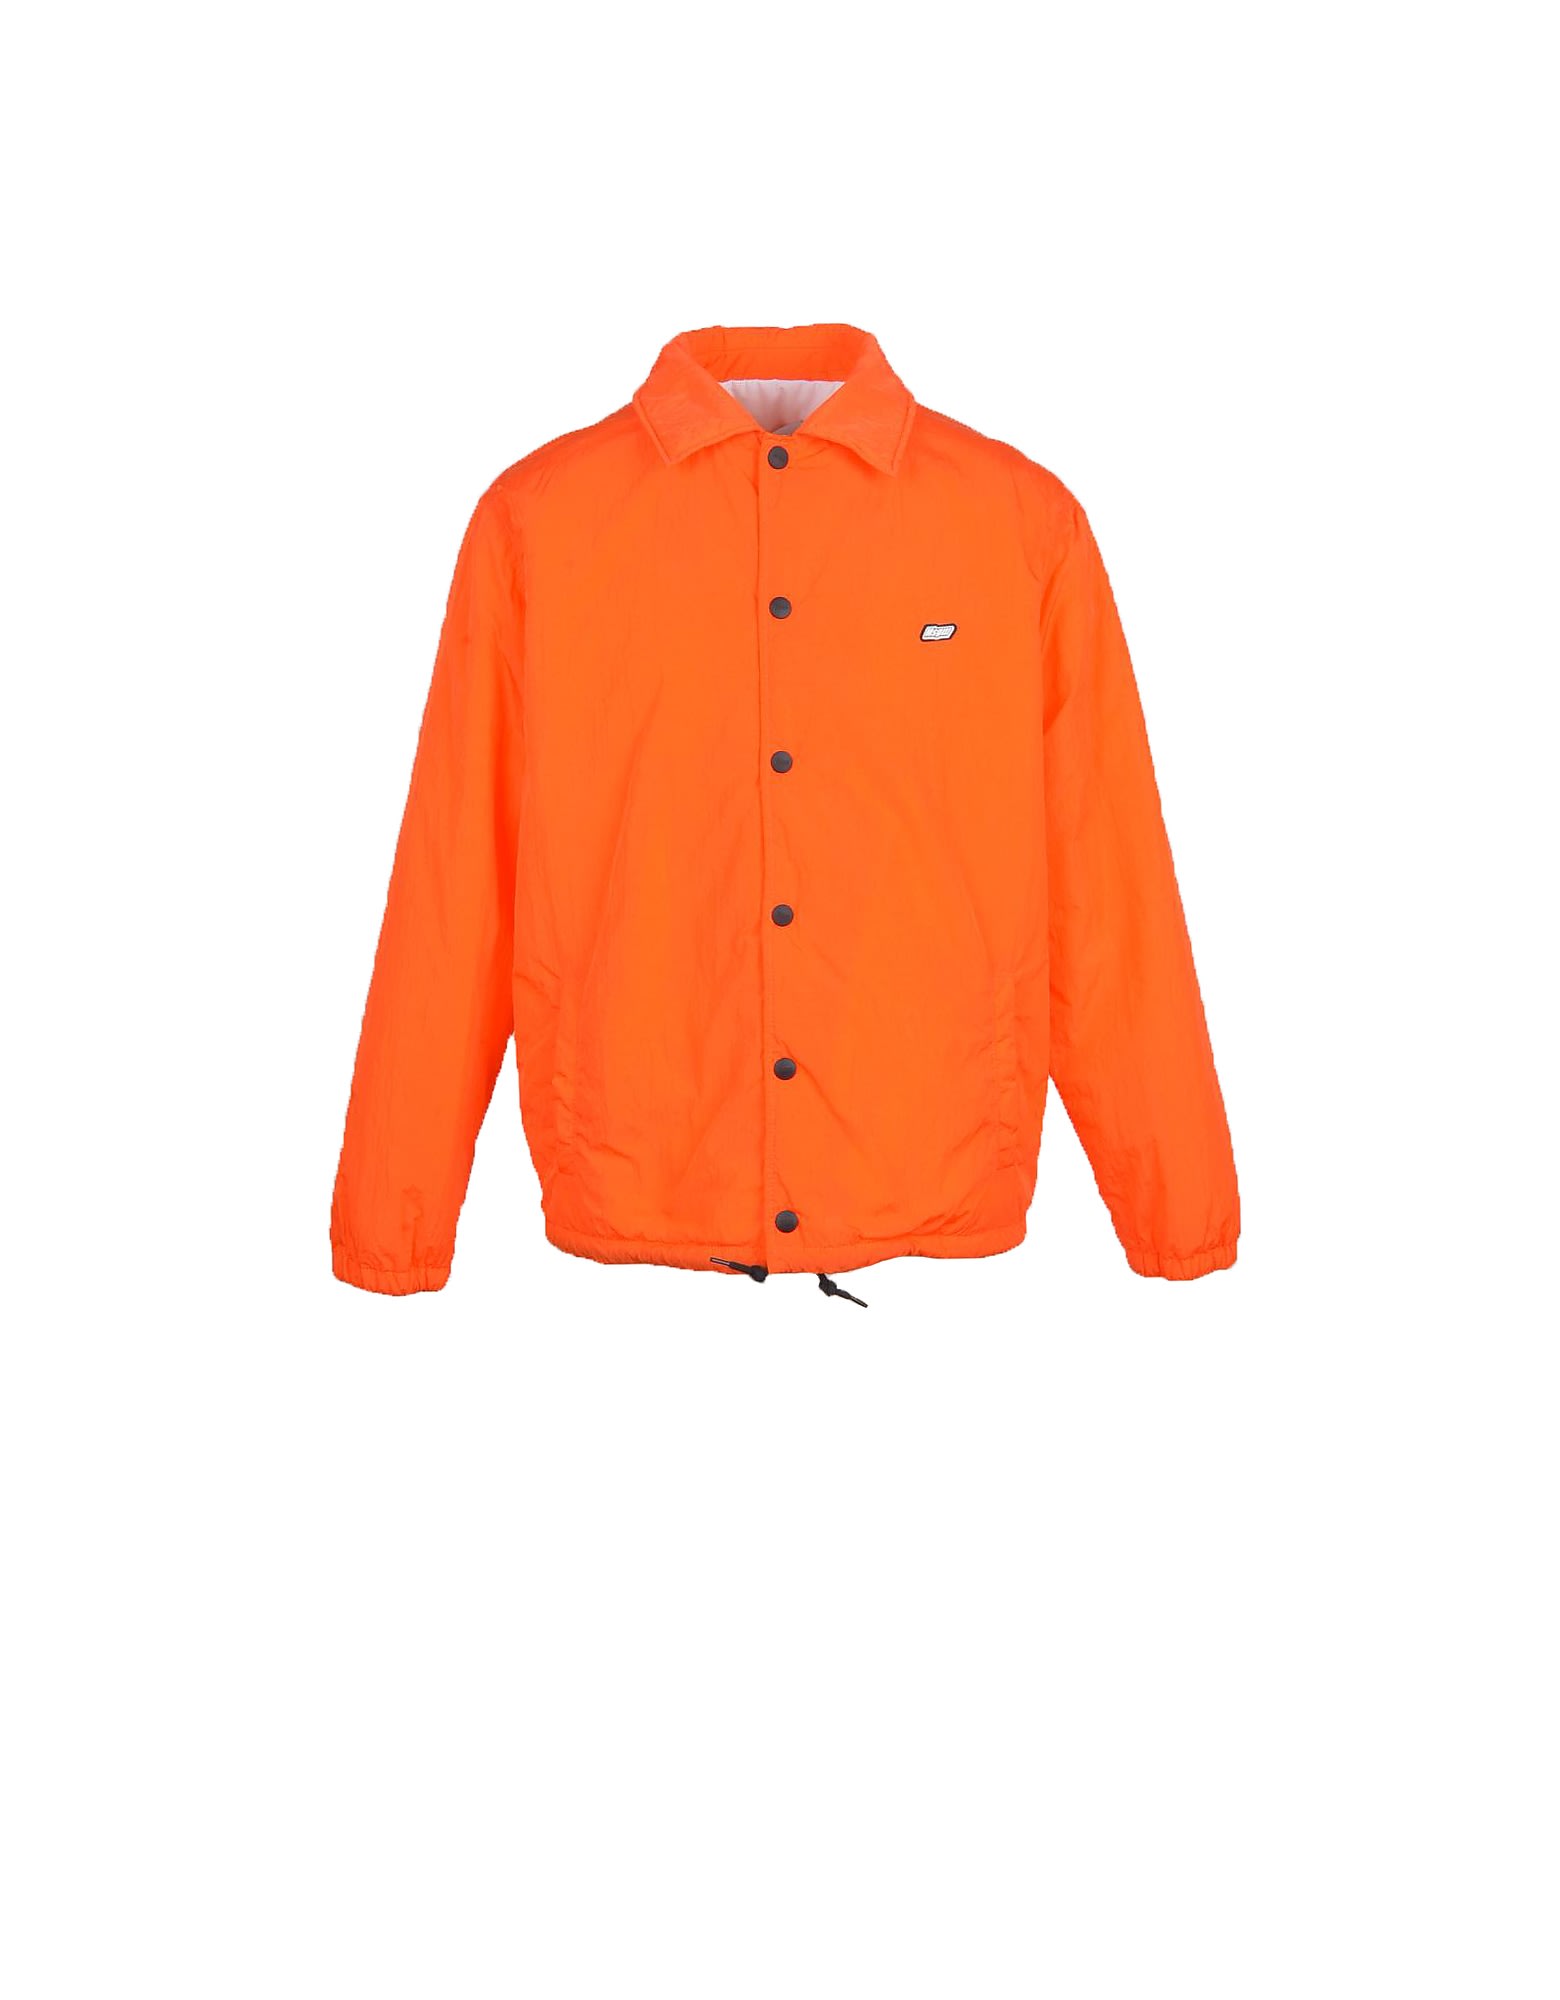 Msgm Mens Orange Jacket